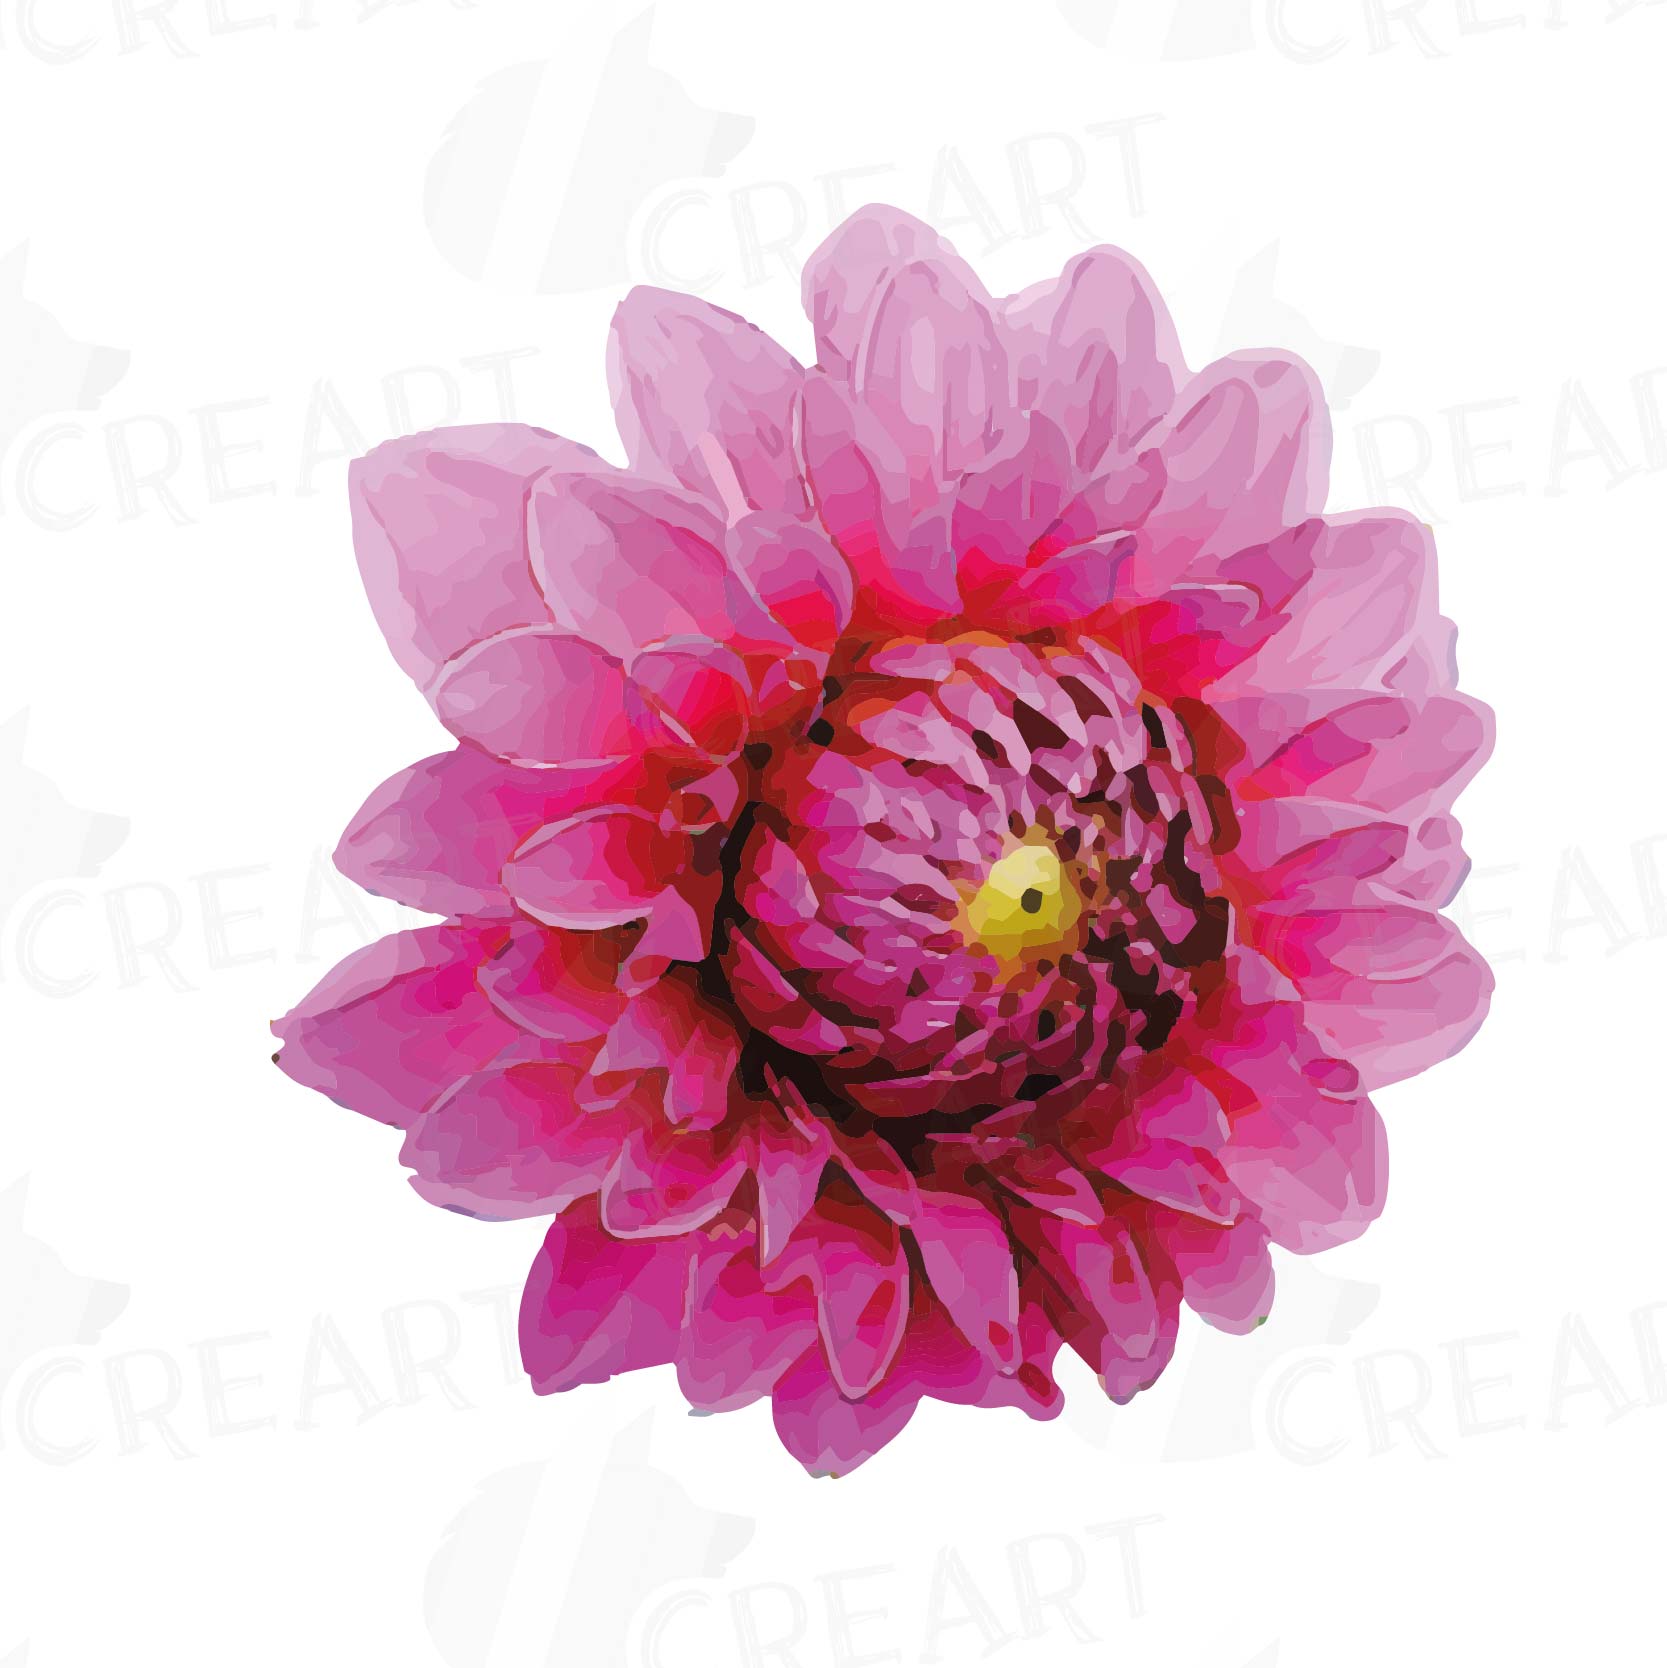 Download Watercolor Dahlia flower clip art pack, watercolor pink ...